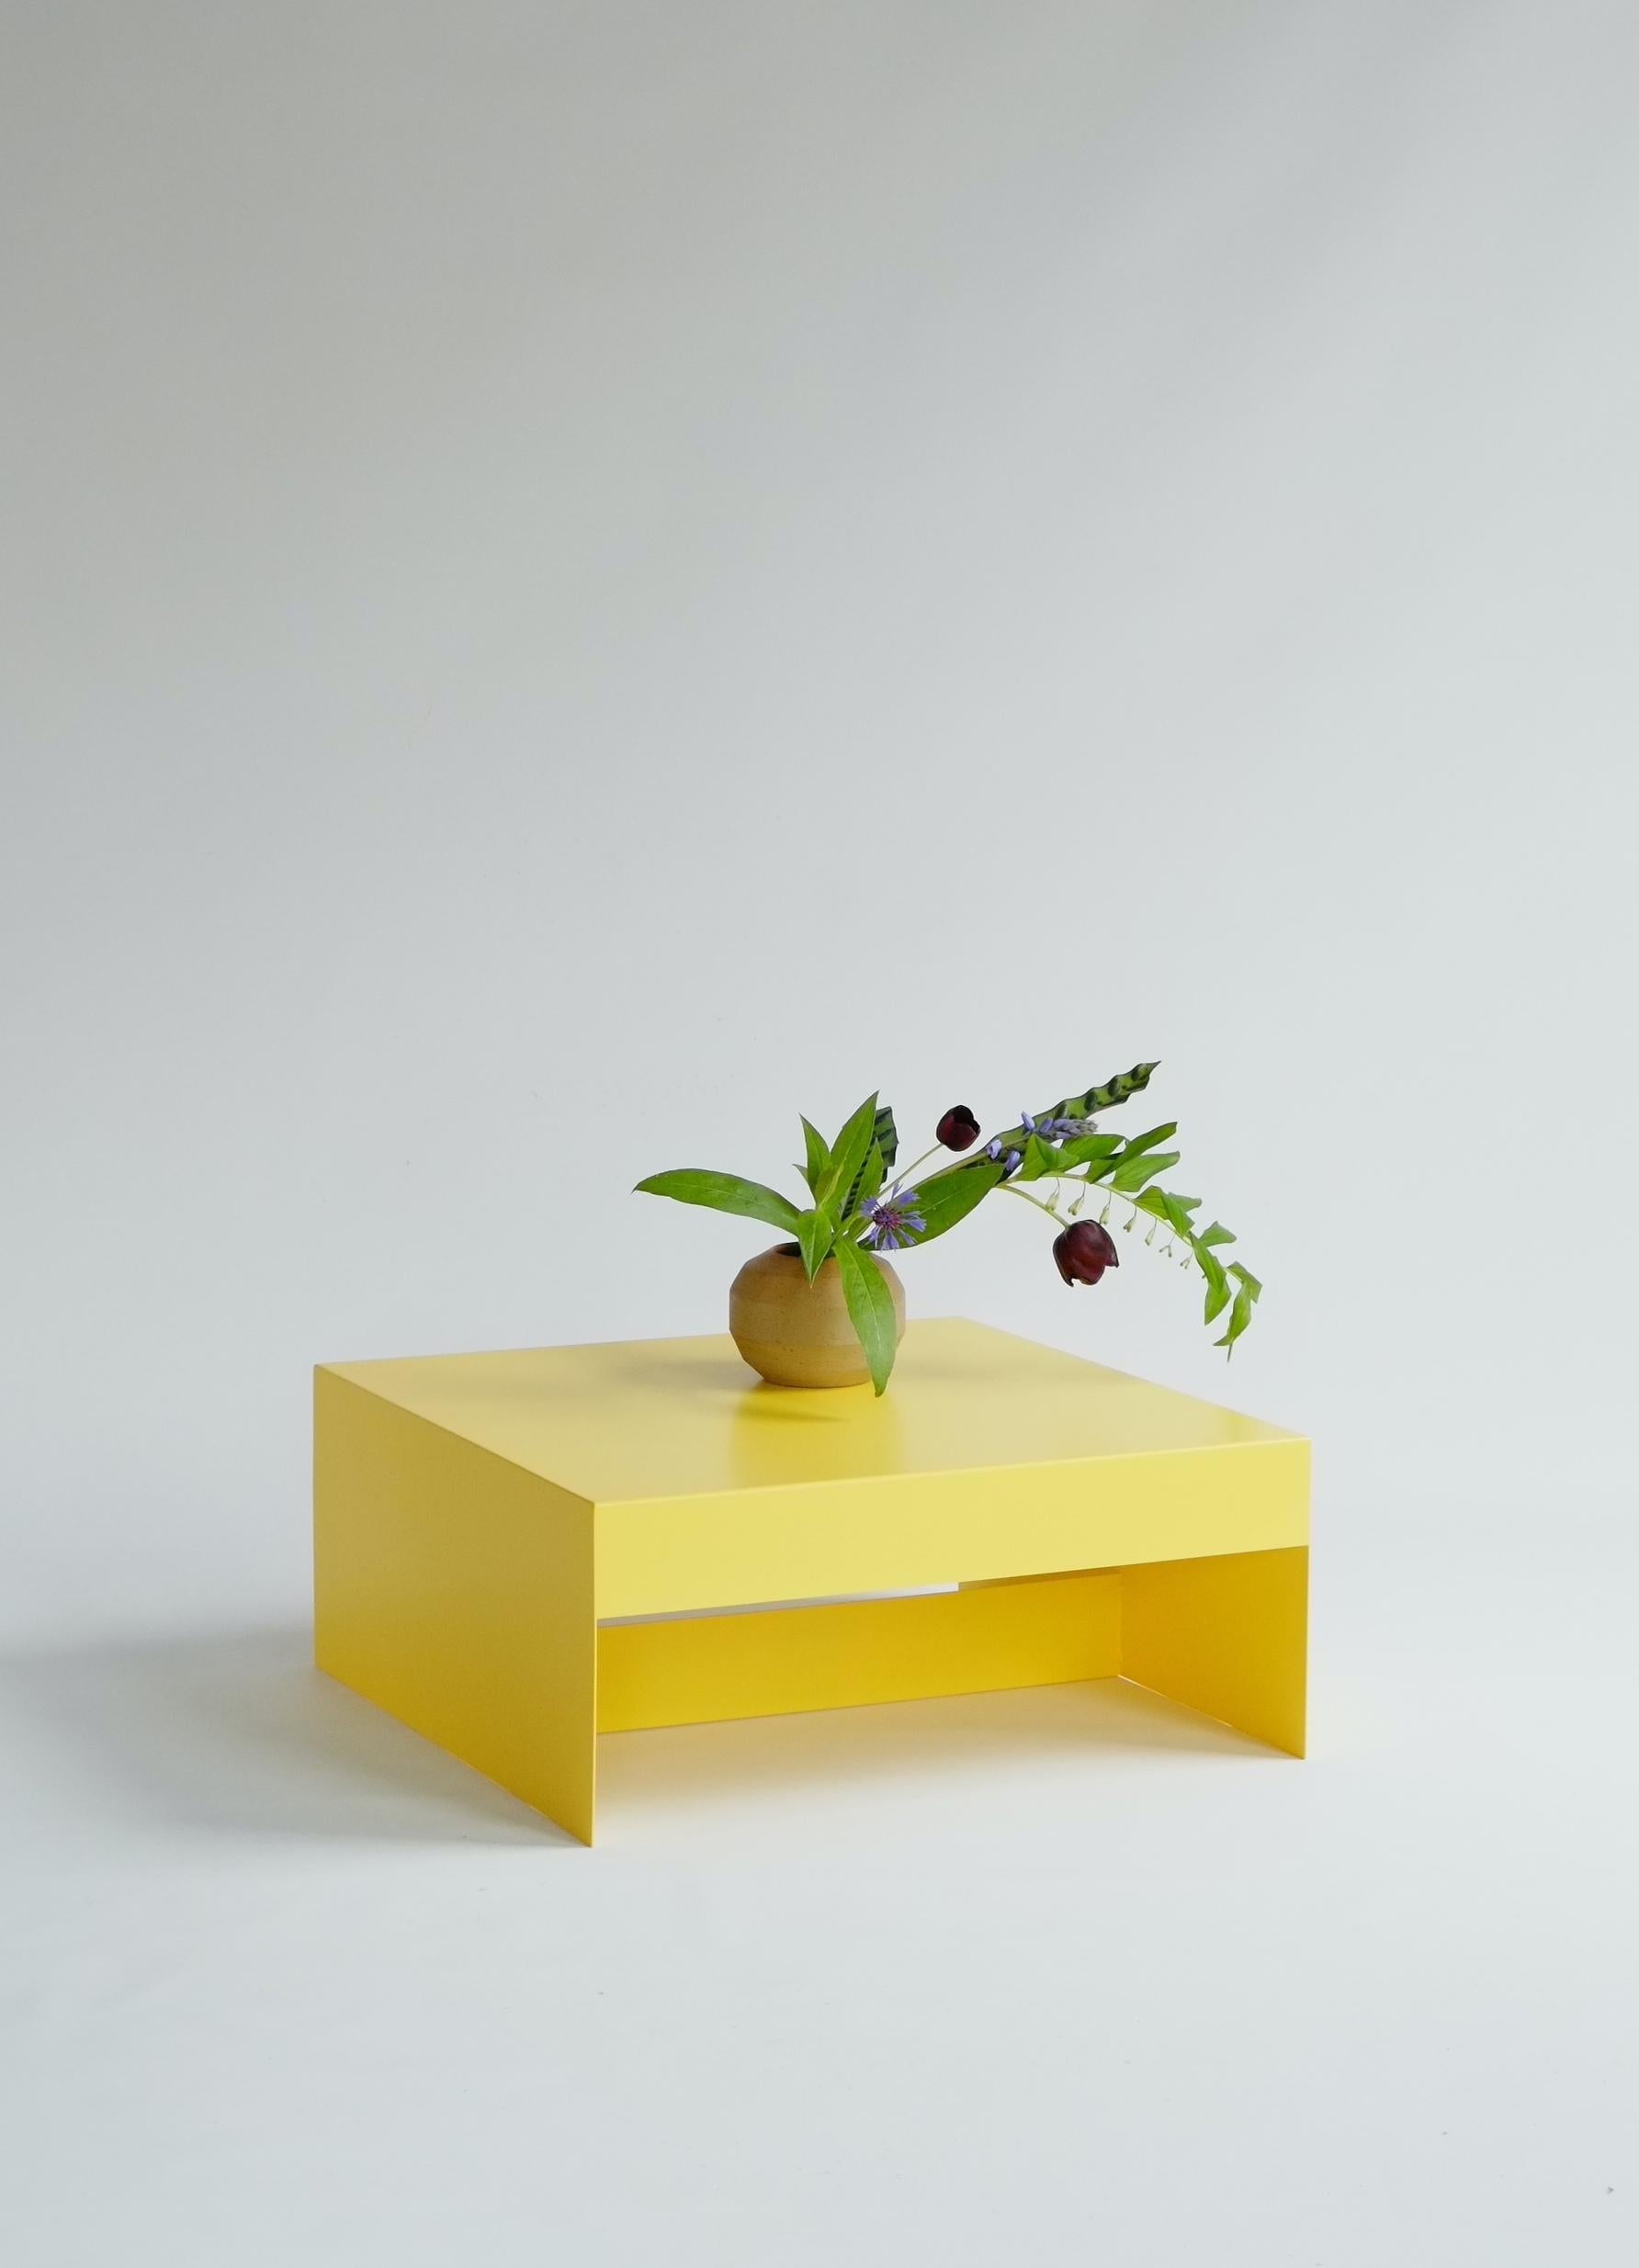 British Matt Yellow, Single Form Square Aluminium Coffee Table - Indoor / Outdoor For Sale